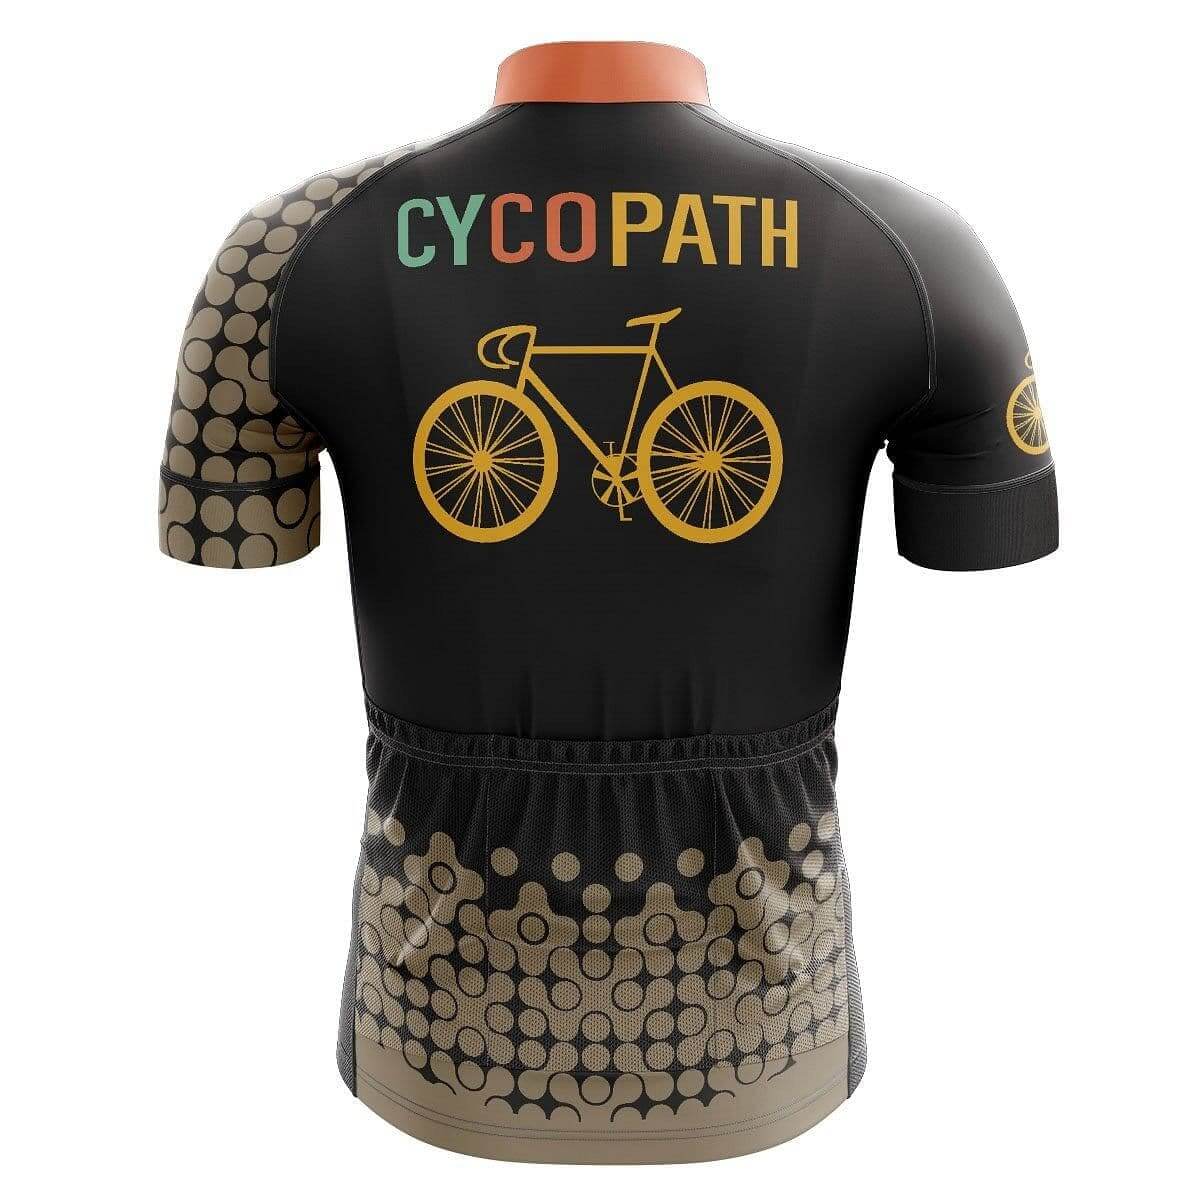 Men's Cycopath Cycling Jersey.